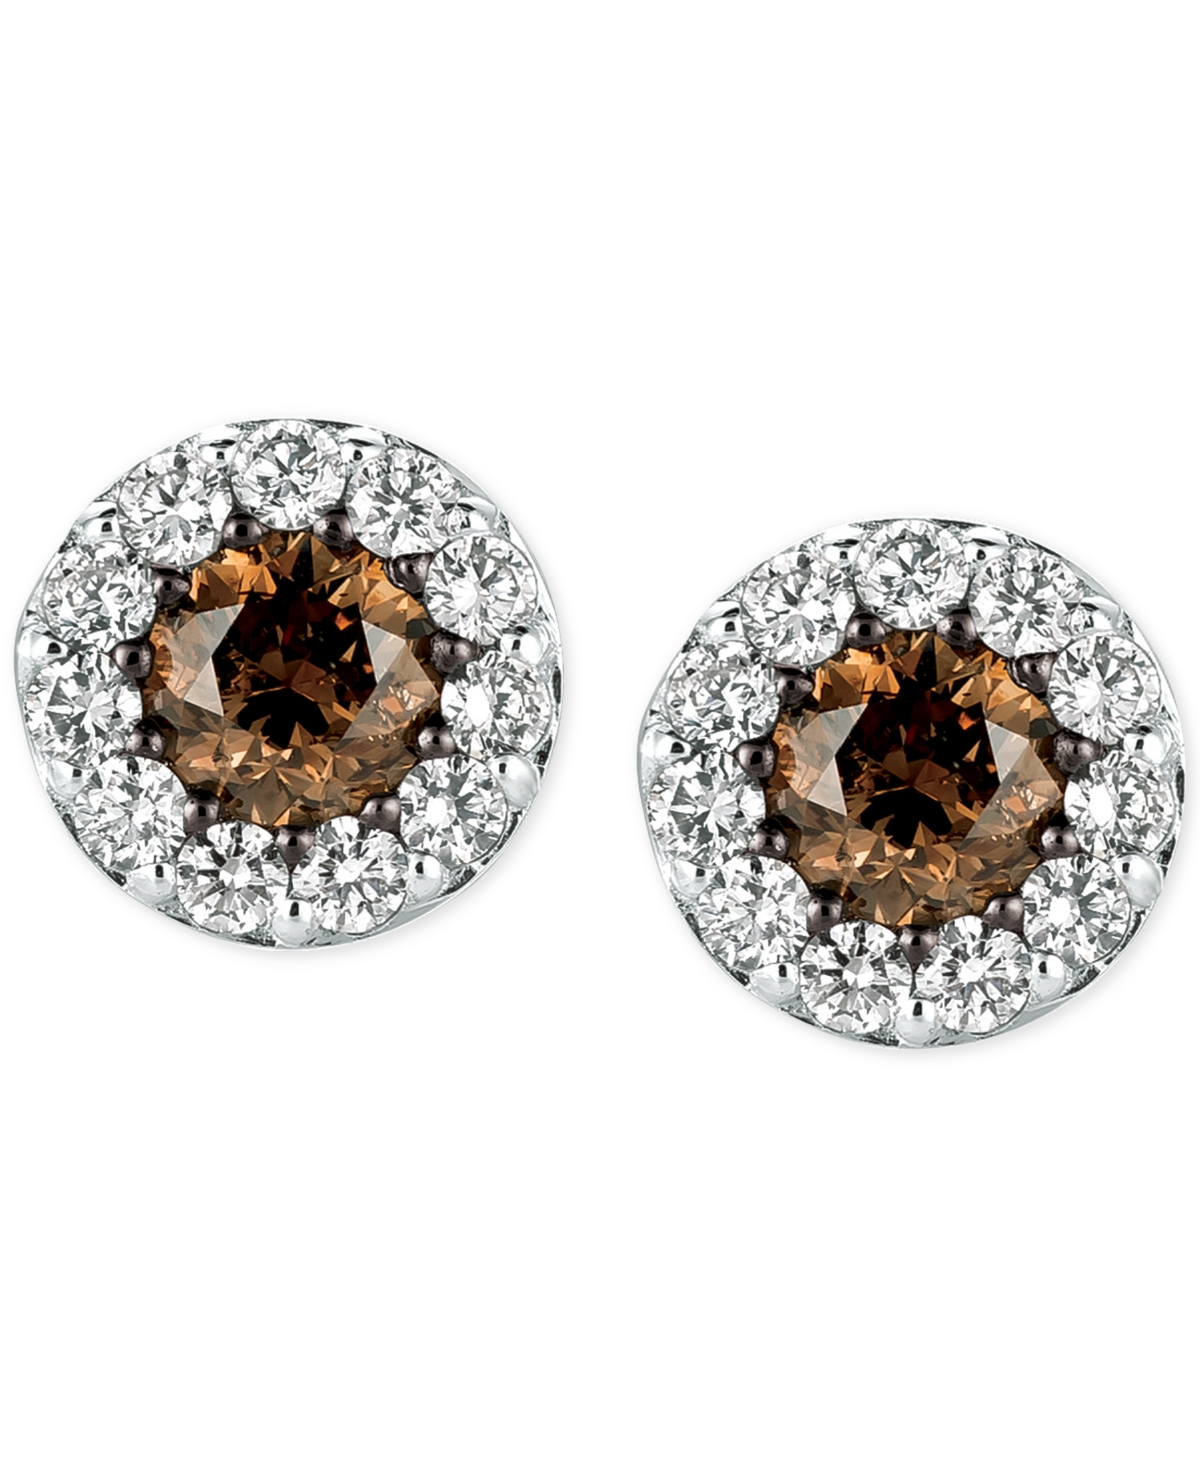 Chocolatier Diamond Stud Earrings (1 ct. t.w.) in 14k White Gold - White Gold